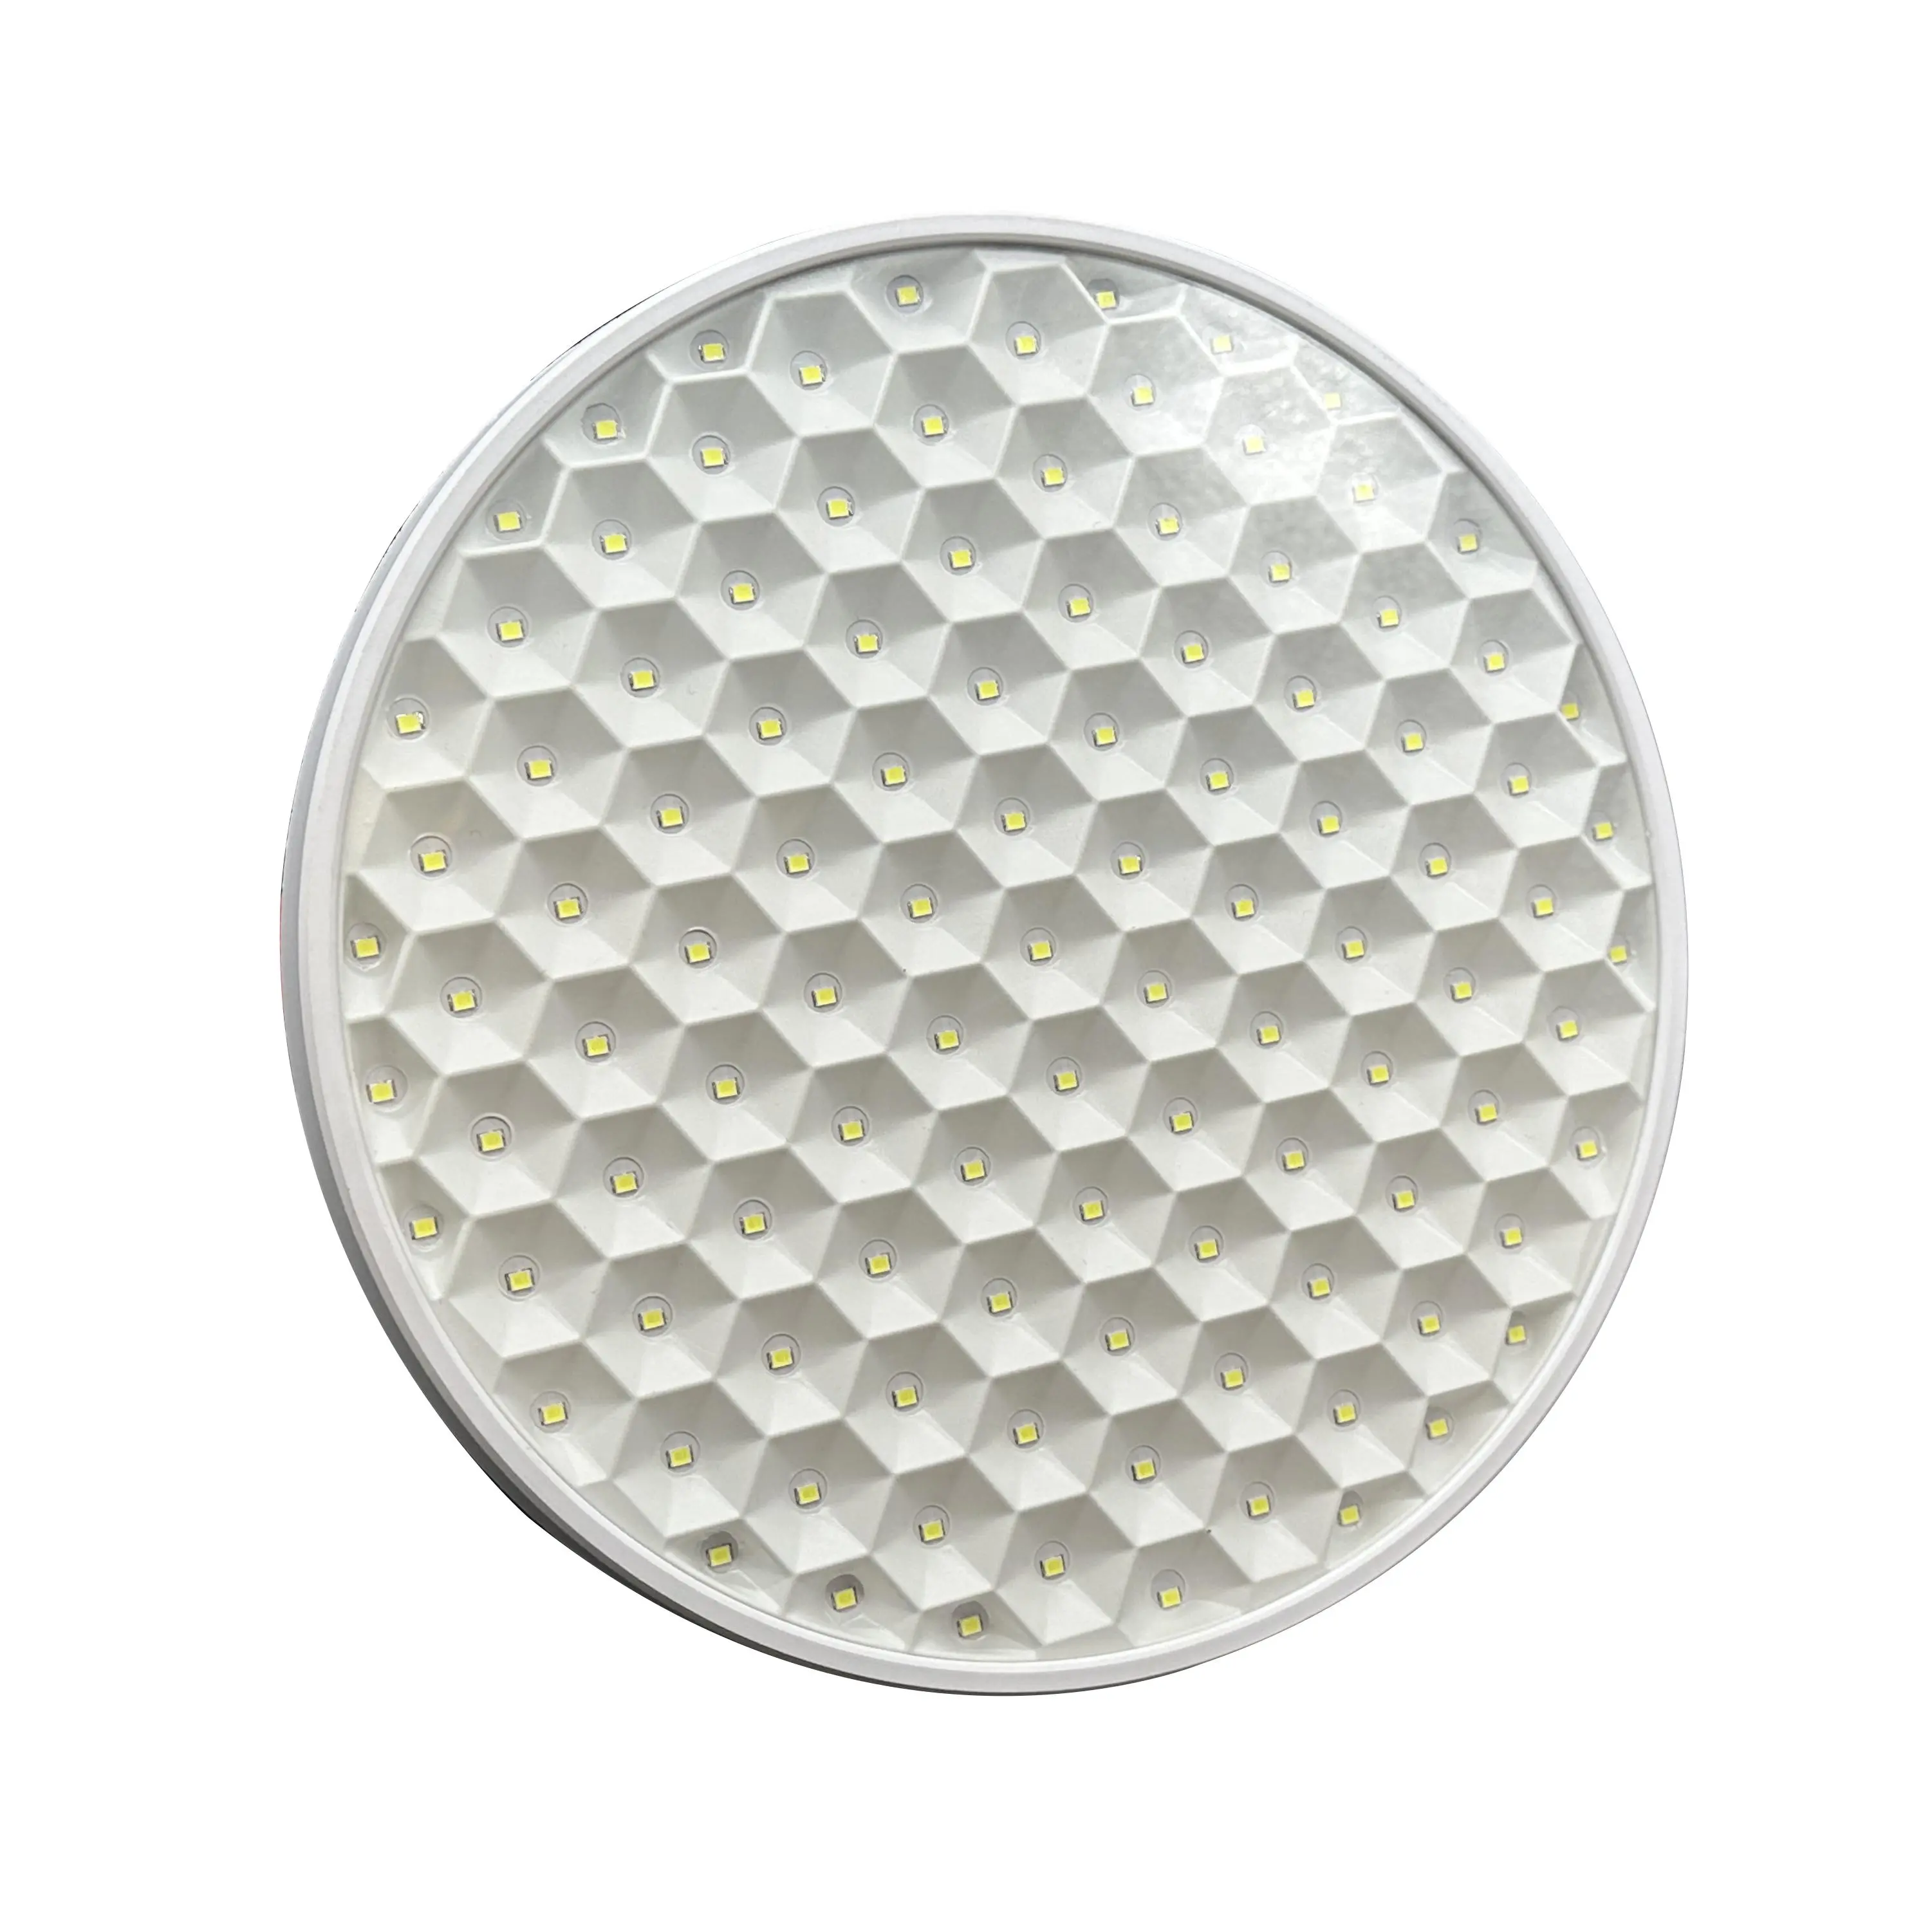 LED Honeycomb panel light- slim panel